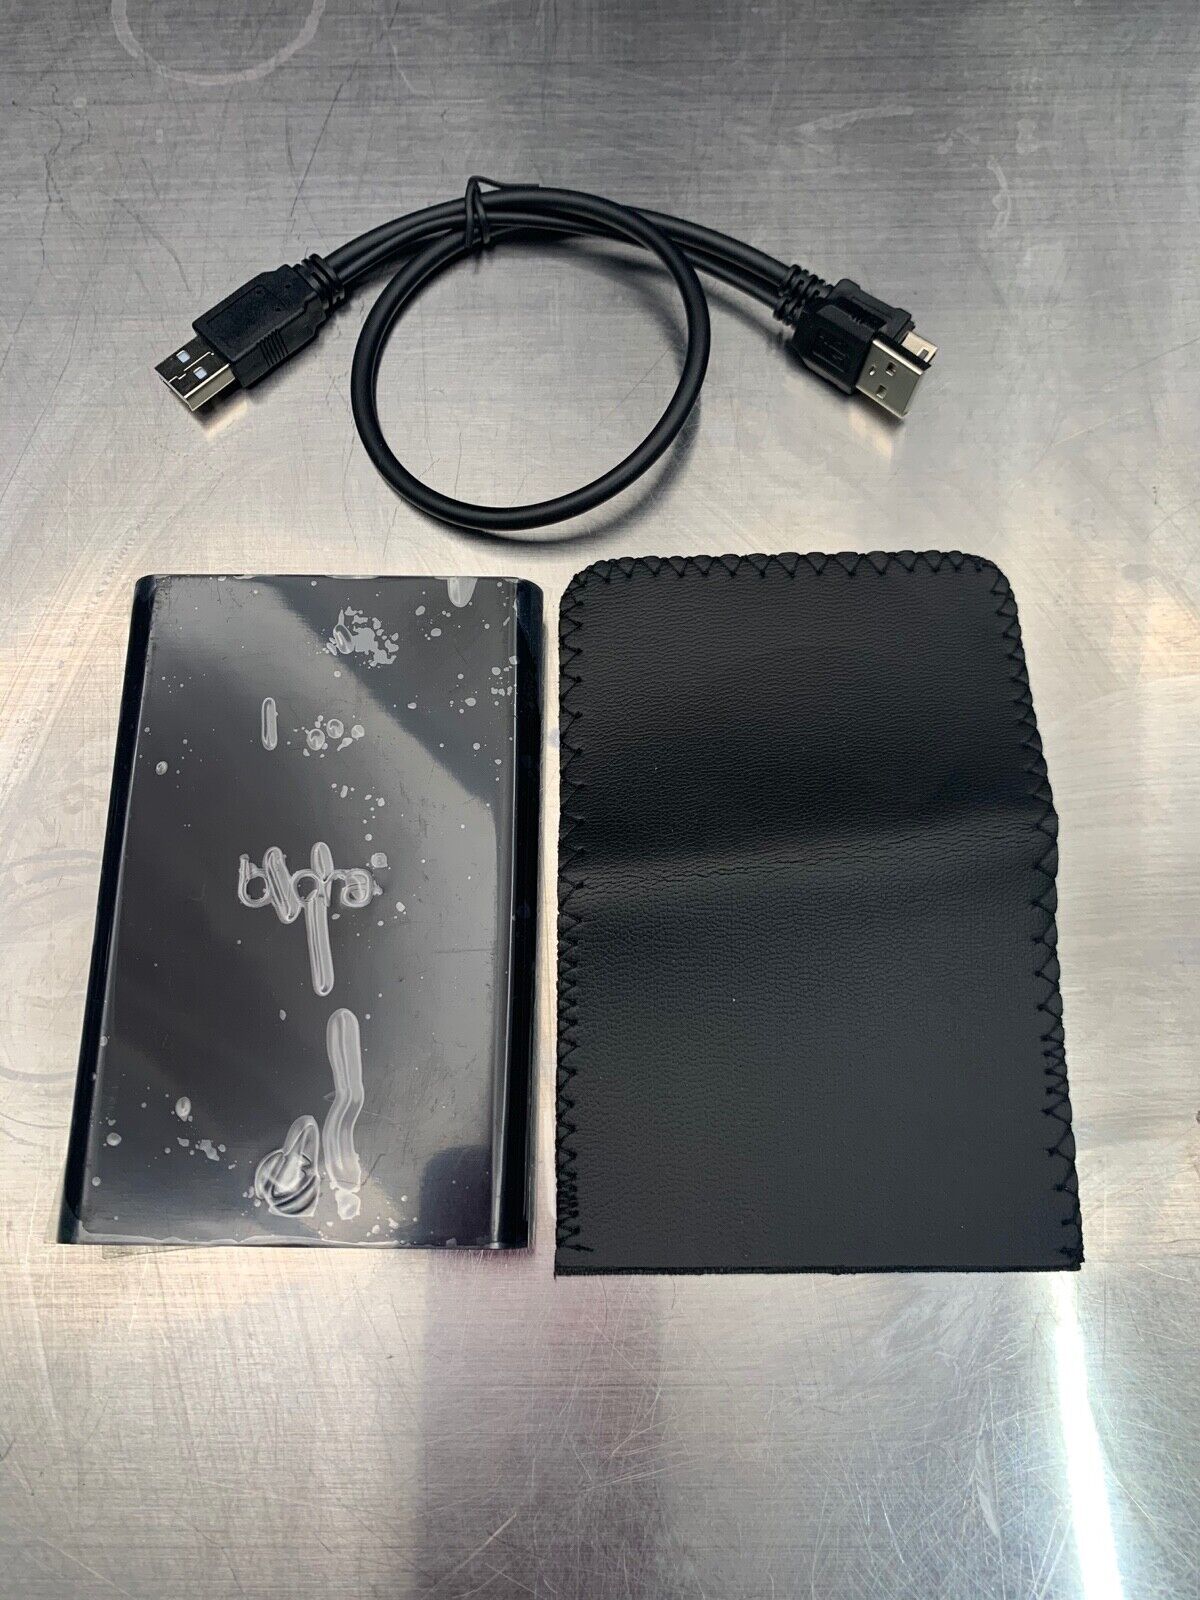 Bipra S2 2.5 Inch USB 2.0 NTFS Portable External Hard Drive - Black (750GB)